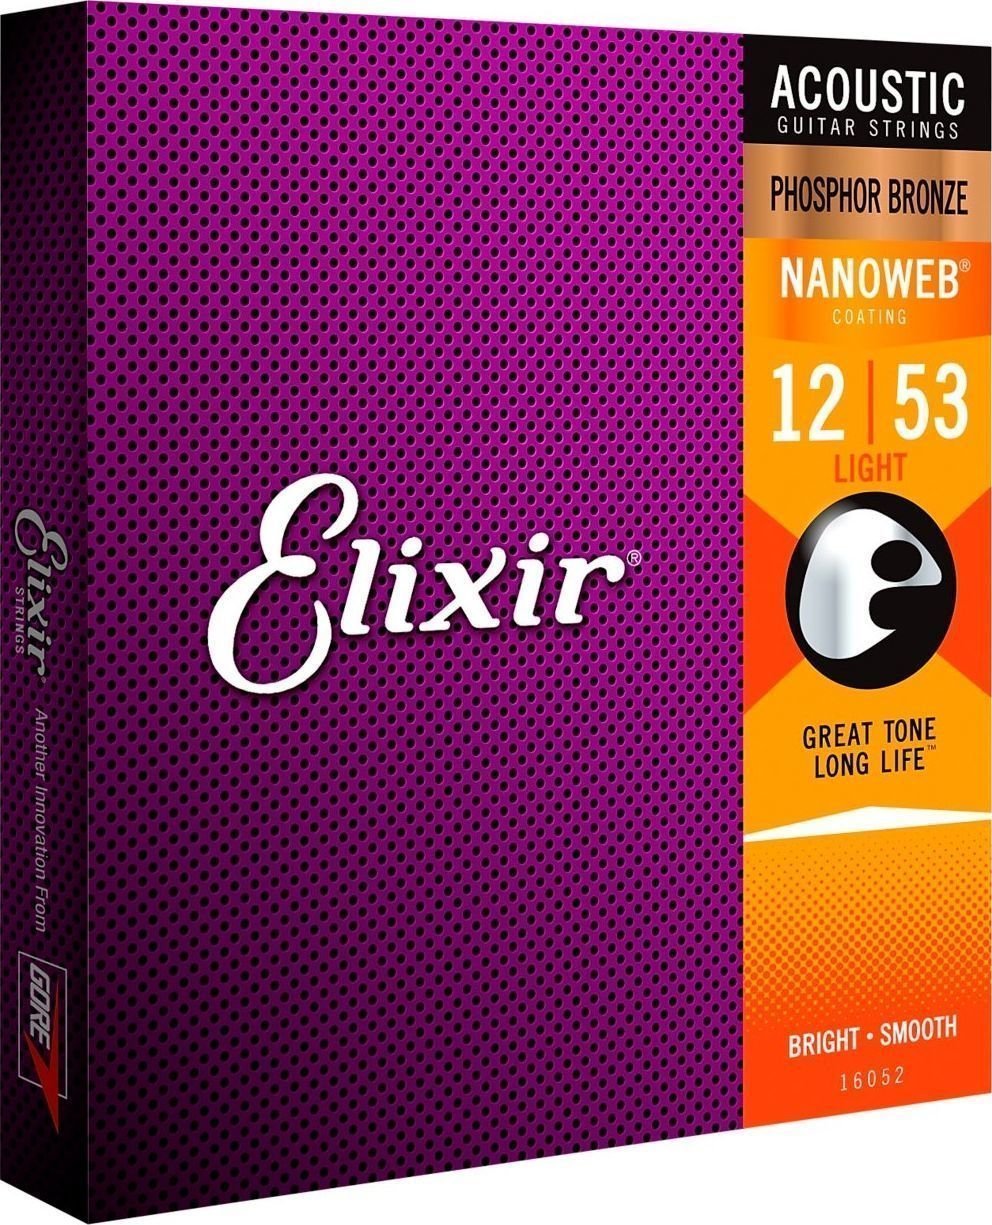 Struny pro akustickou kytaru Elixir 16052 Nanoweb 12-53